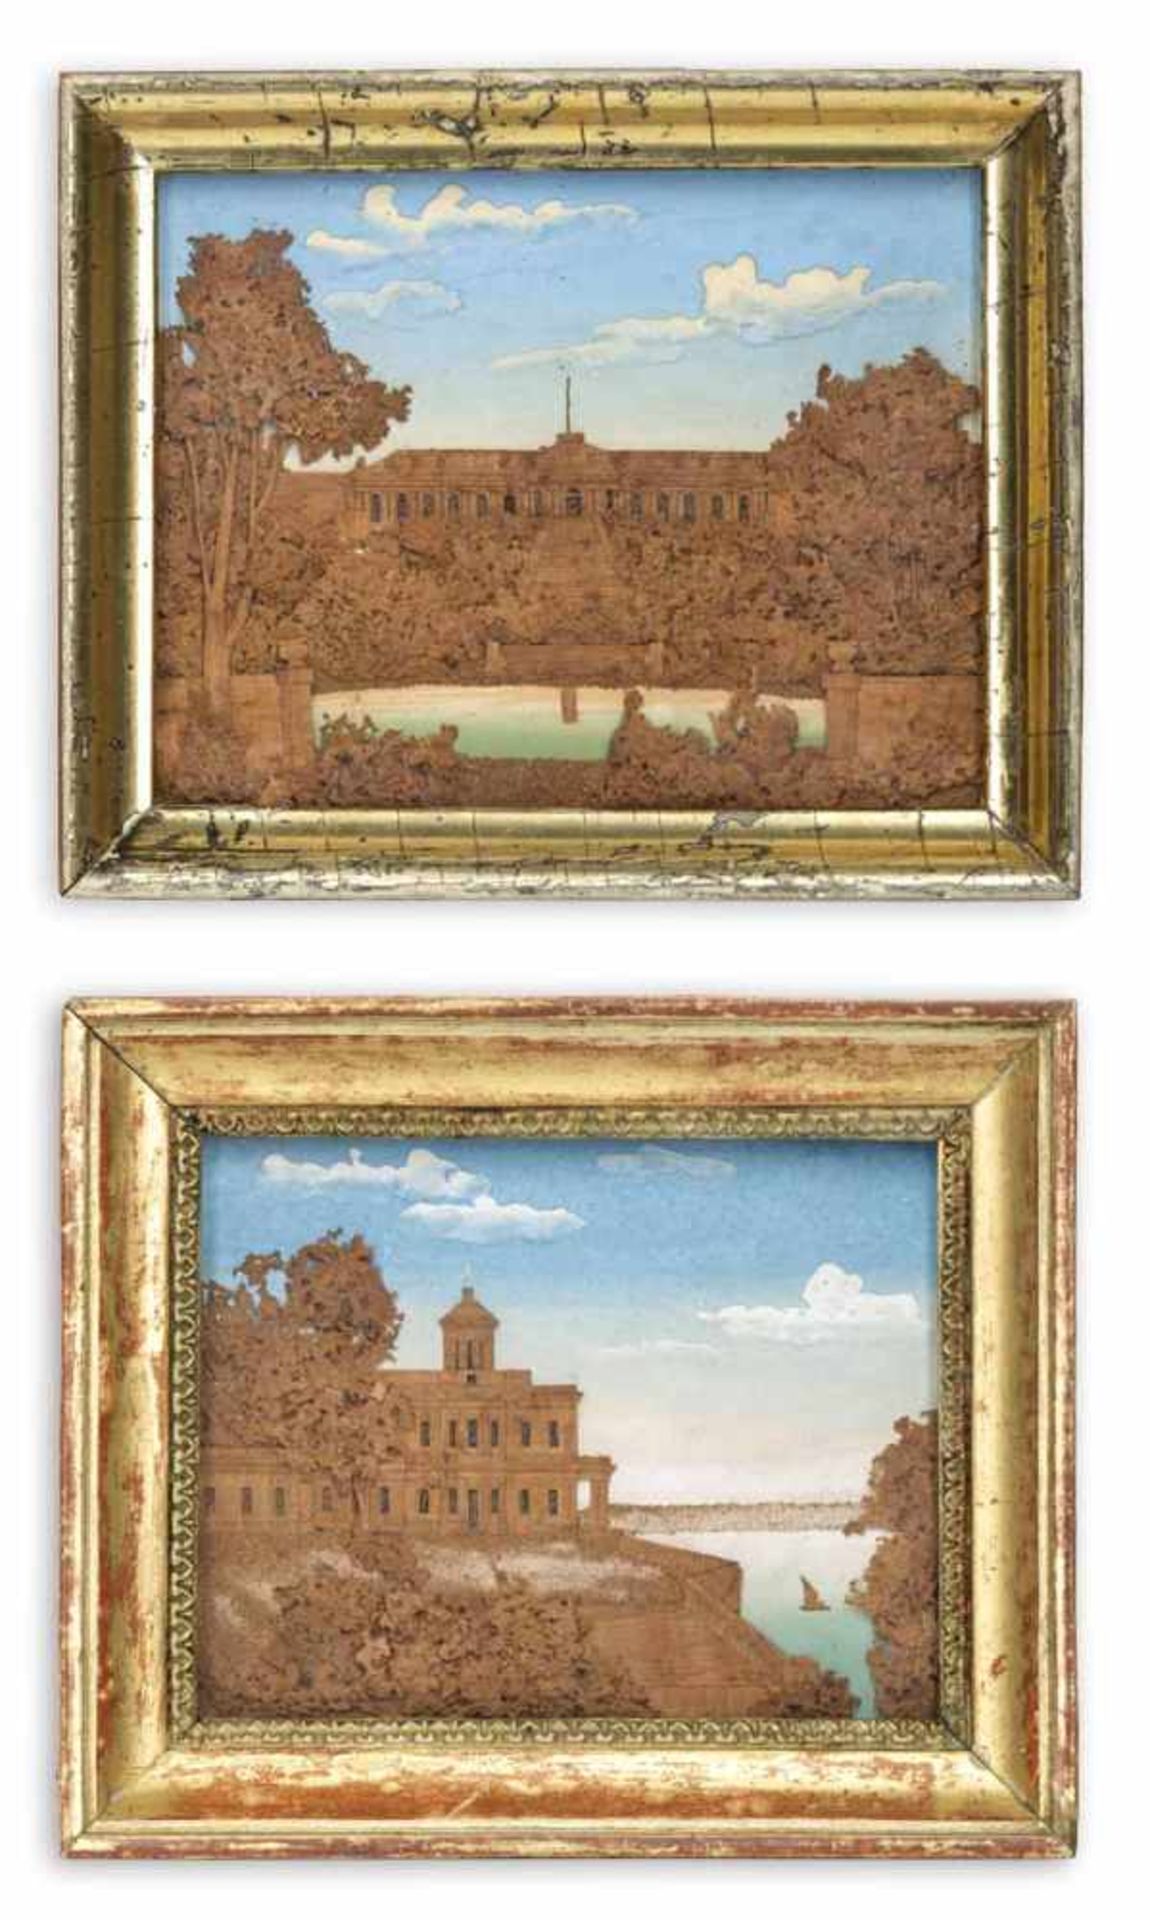 Zwei Korkdioramen, Phelloplastik, Potsdam-AnsichtenMitte 19. JahrhundertH. 10,5/12 cmSchloss